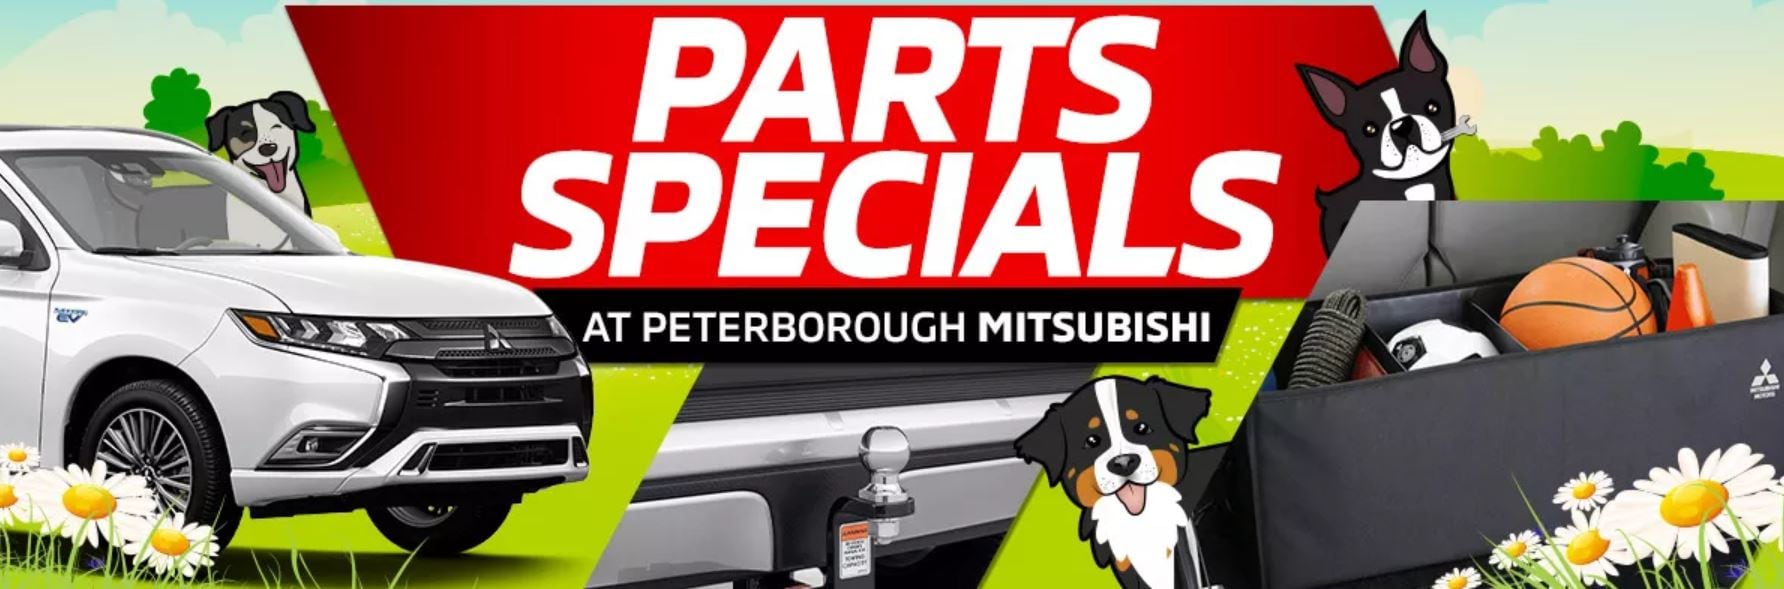 Mitsubishi Parts Specials in Peterborough, ON